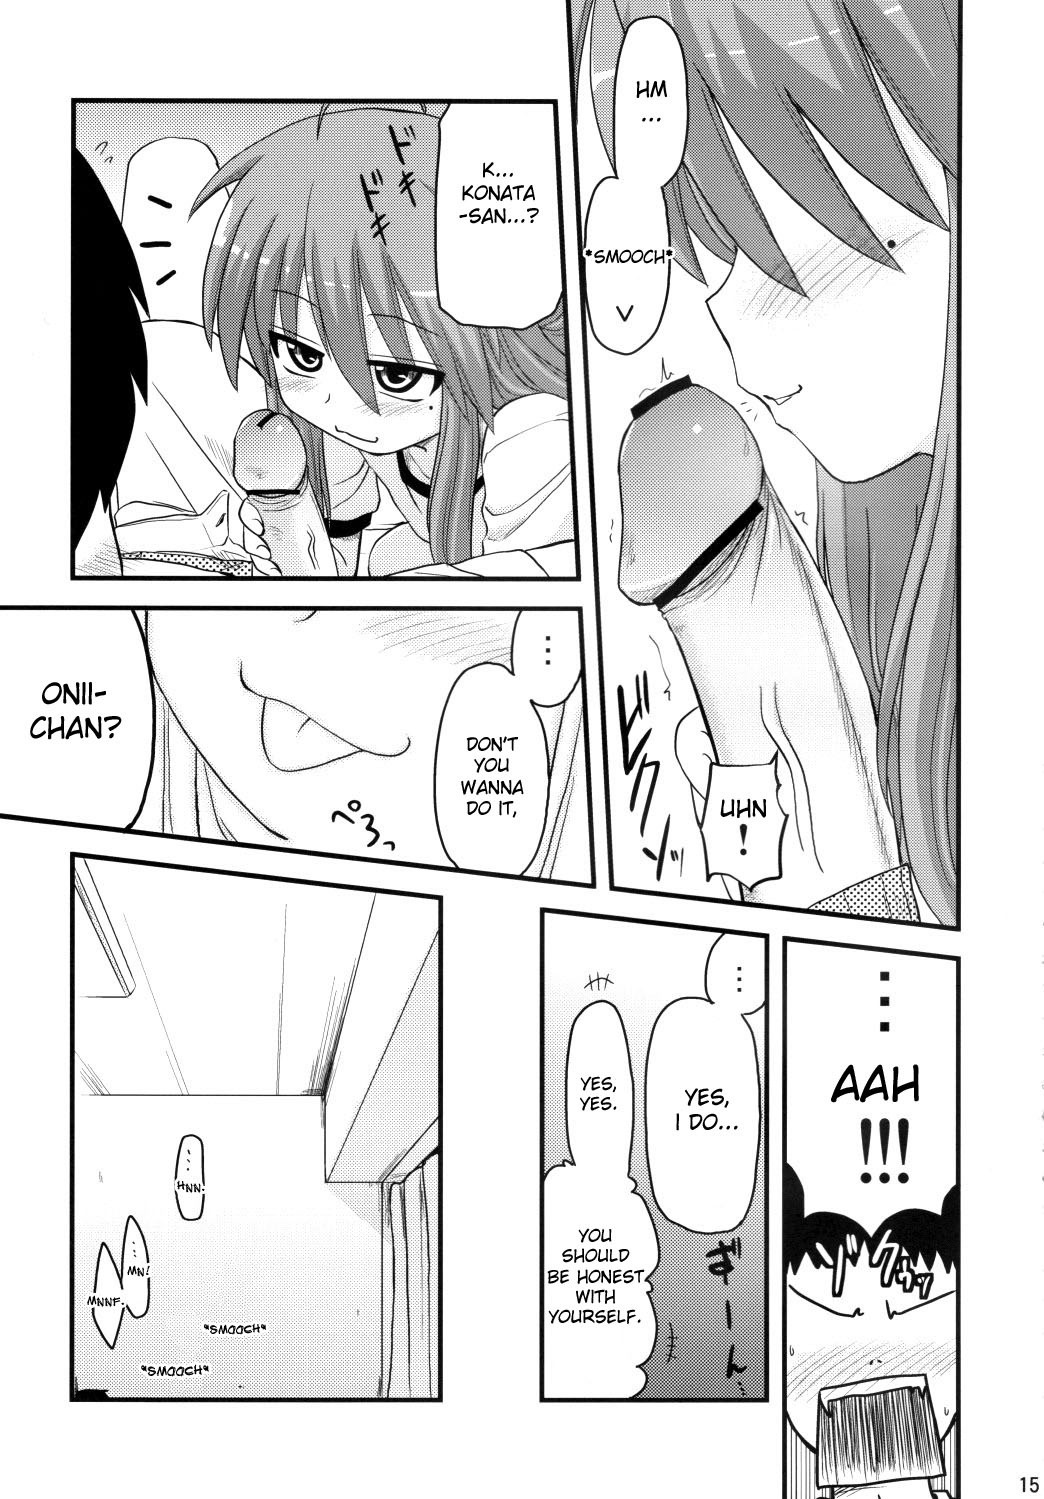 Konata and Oh-zu 4 people each and every one + 1 hentai manga picture 11